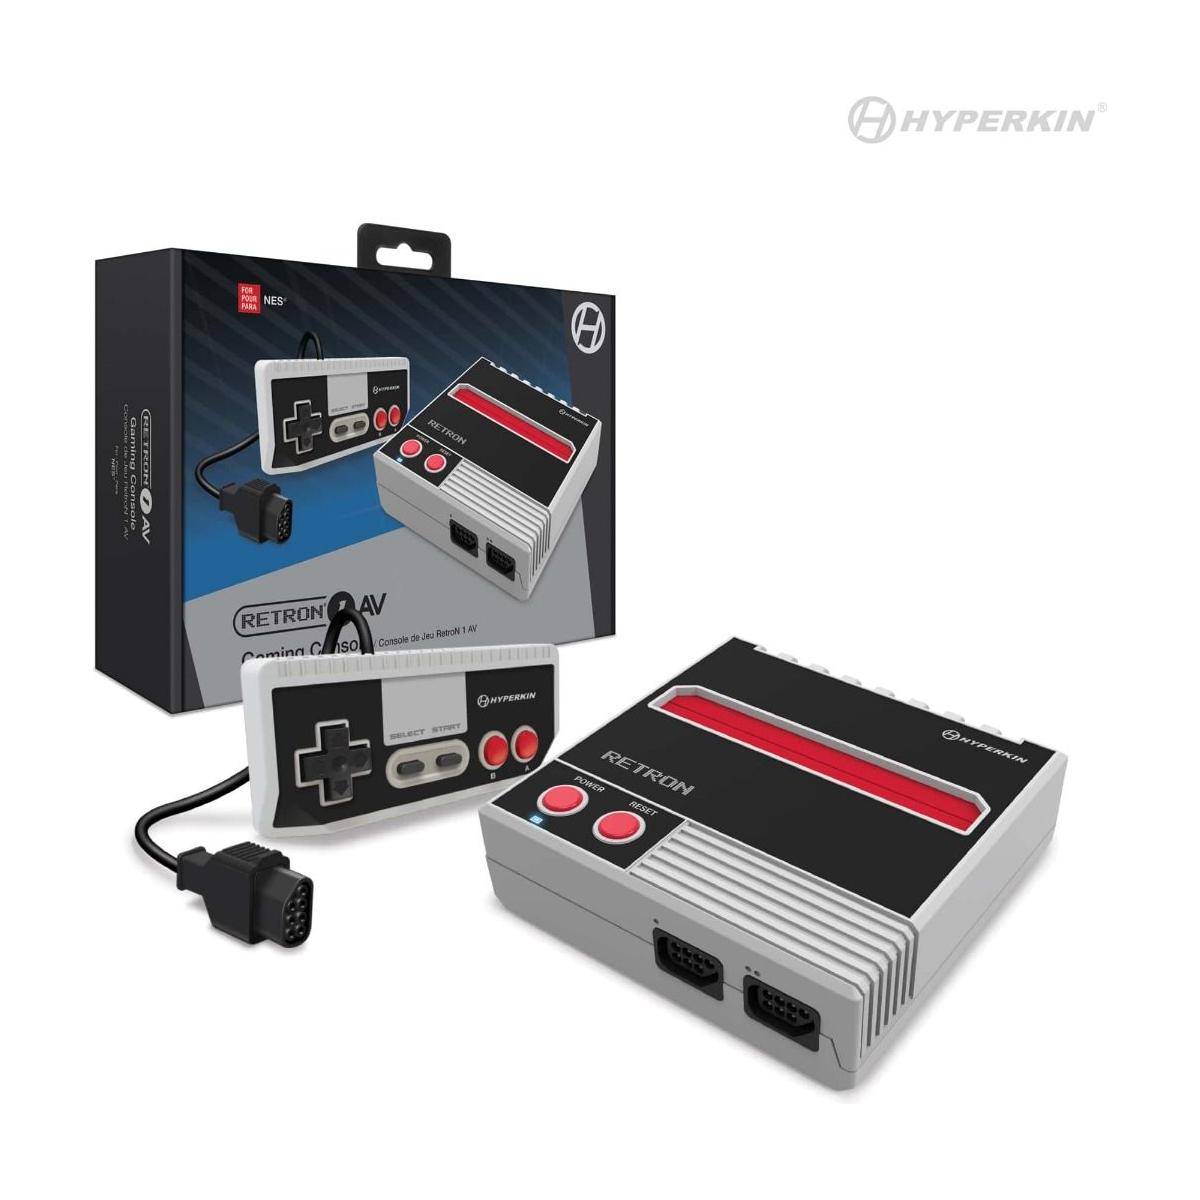 Retron 1 AV Console (NES) (NES Colored)